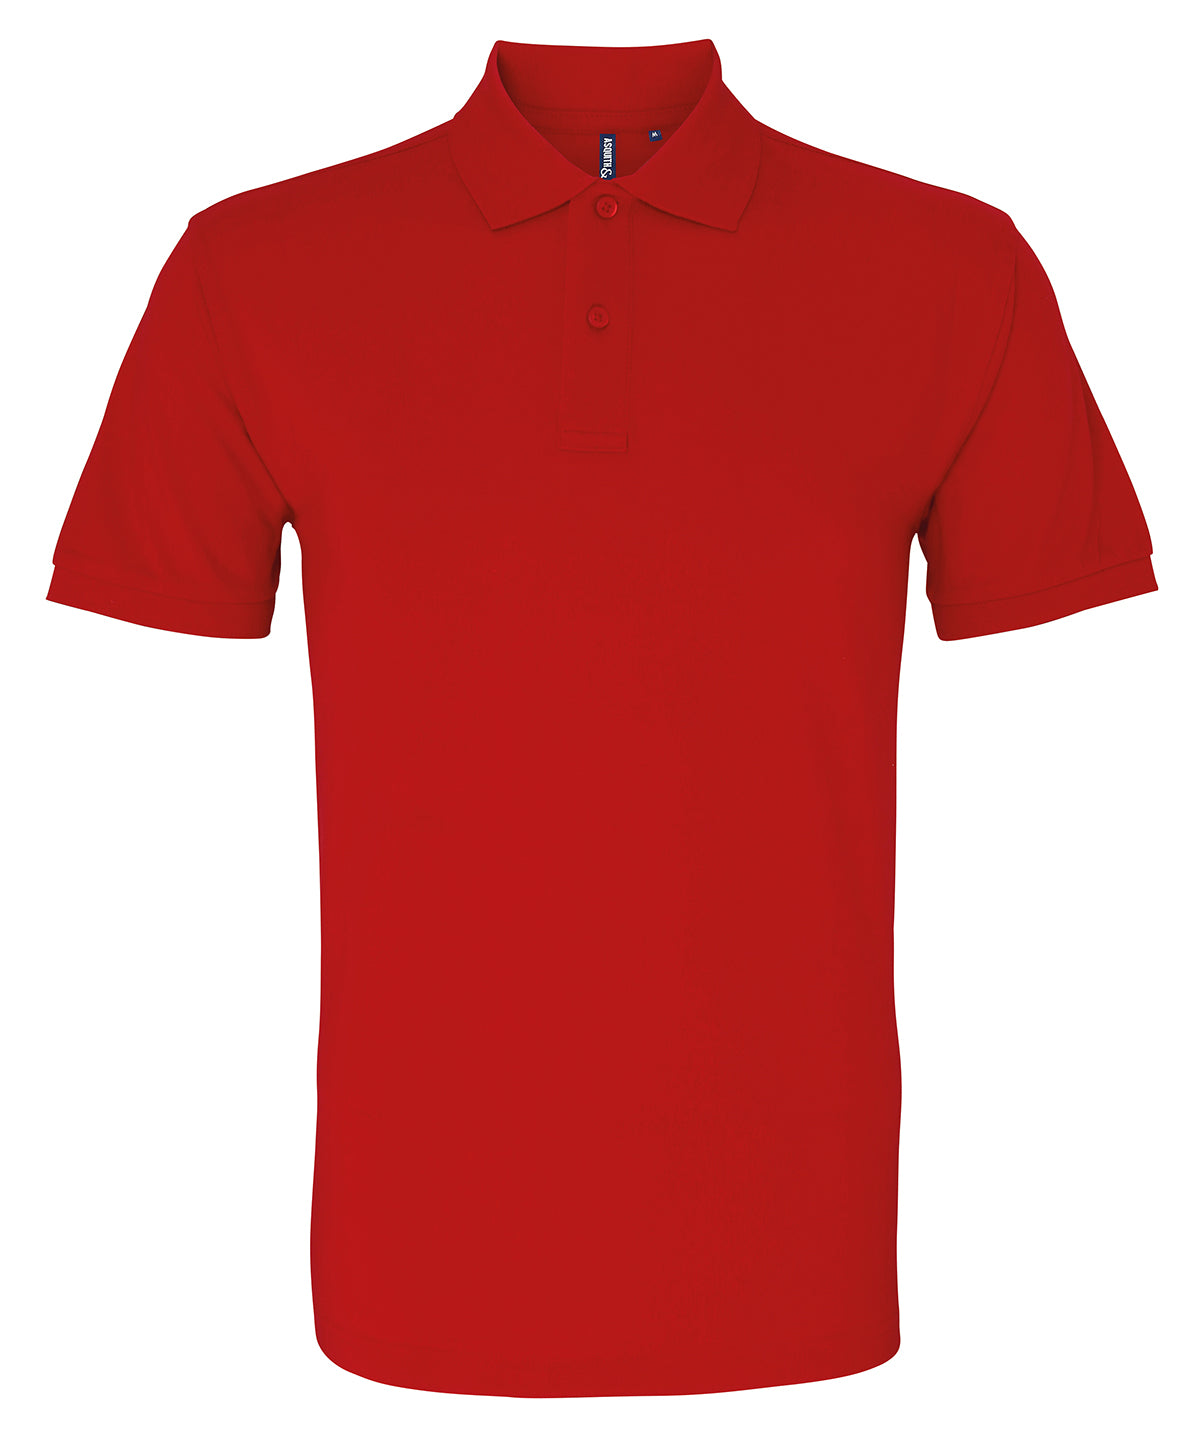 Personalised Polo Shirts - Black Asquith & Fox Men's organic polo